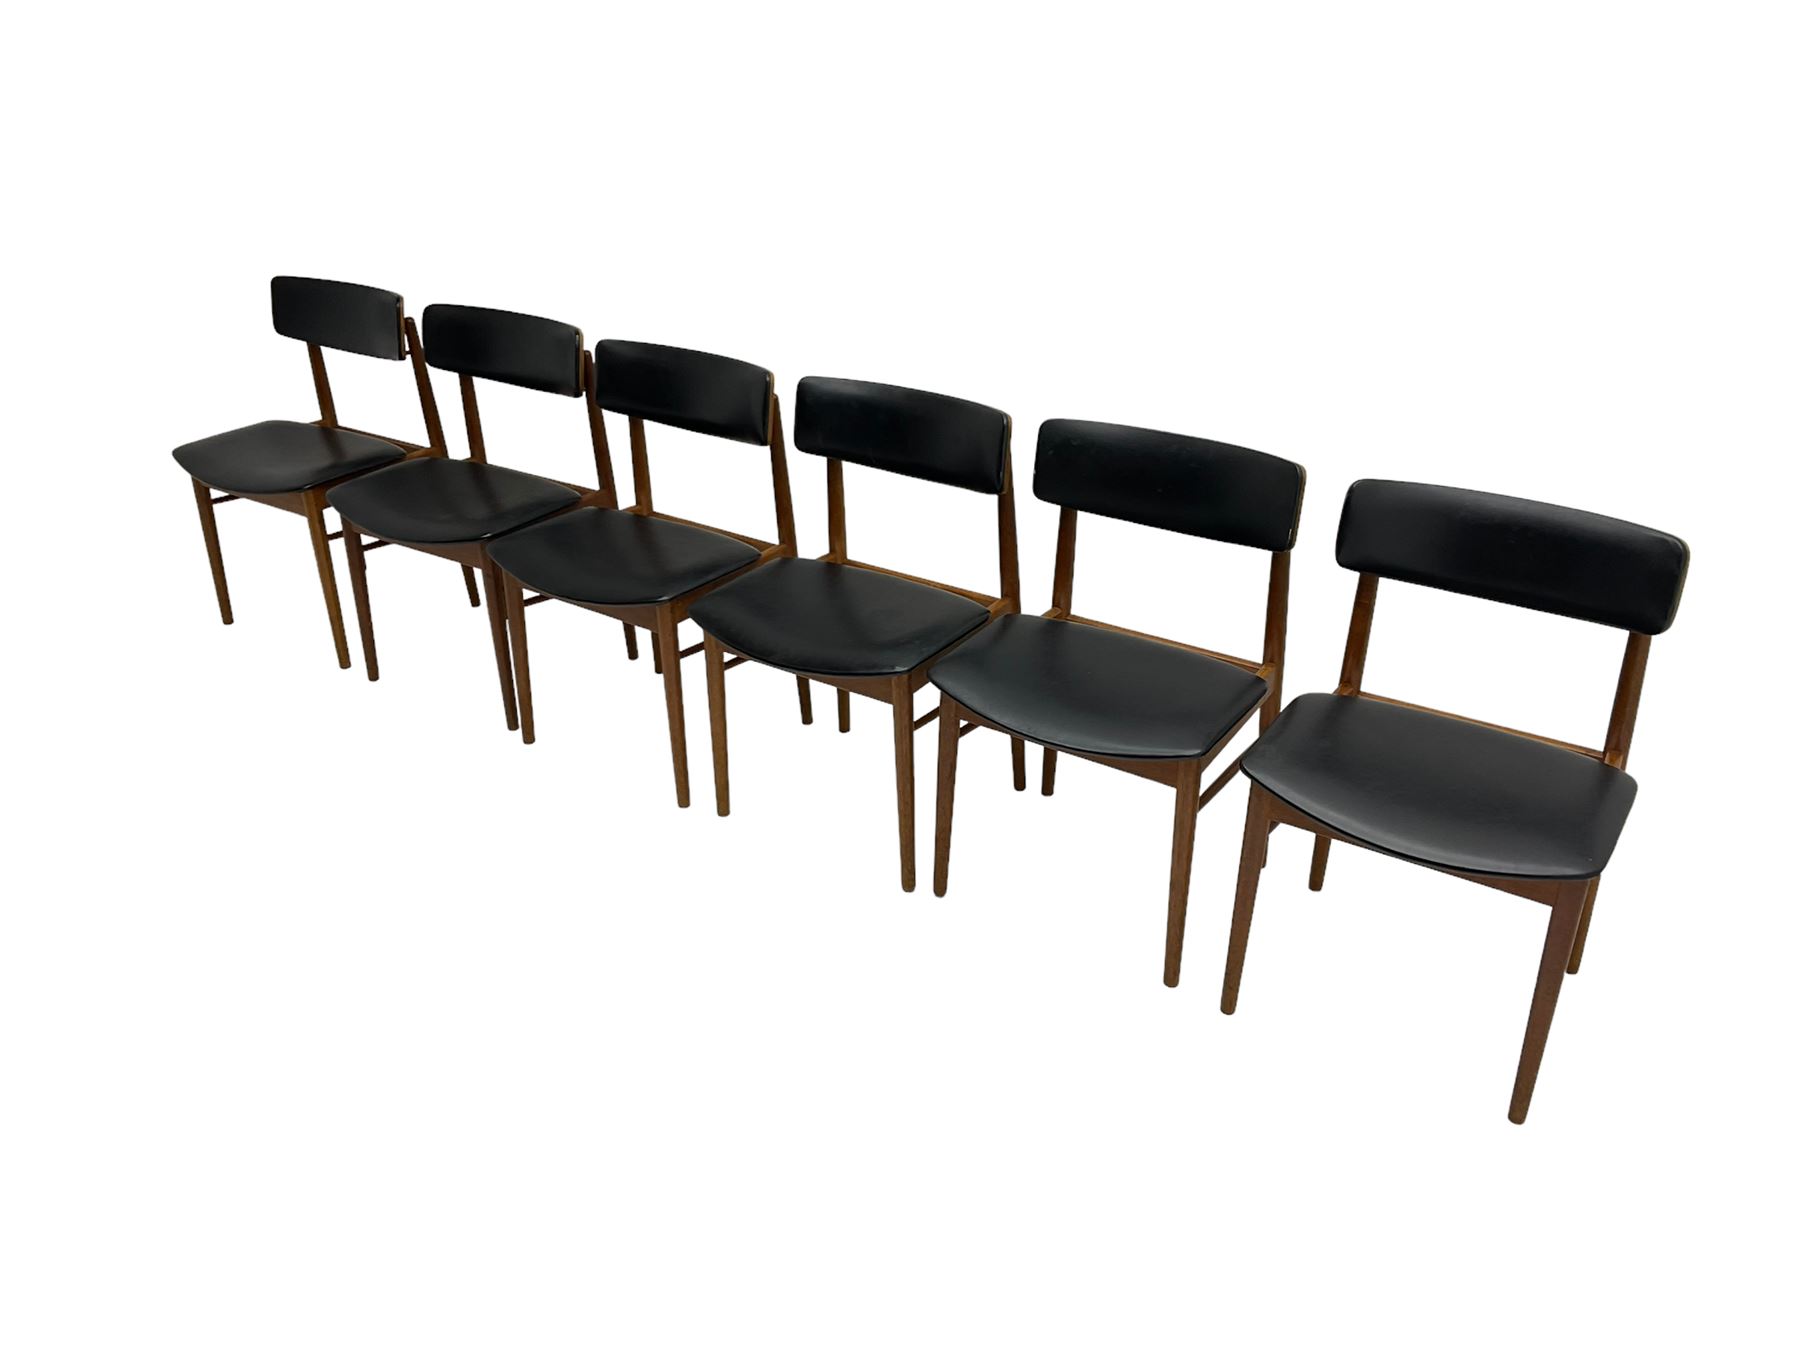 S Chrobat for Sax Mobler - set six mid-20th century Danish teak dining chairs - Image 4 of 6